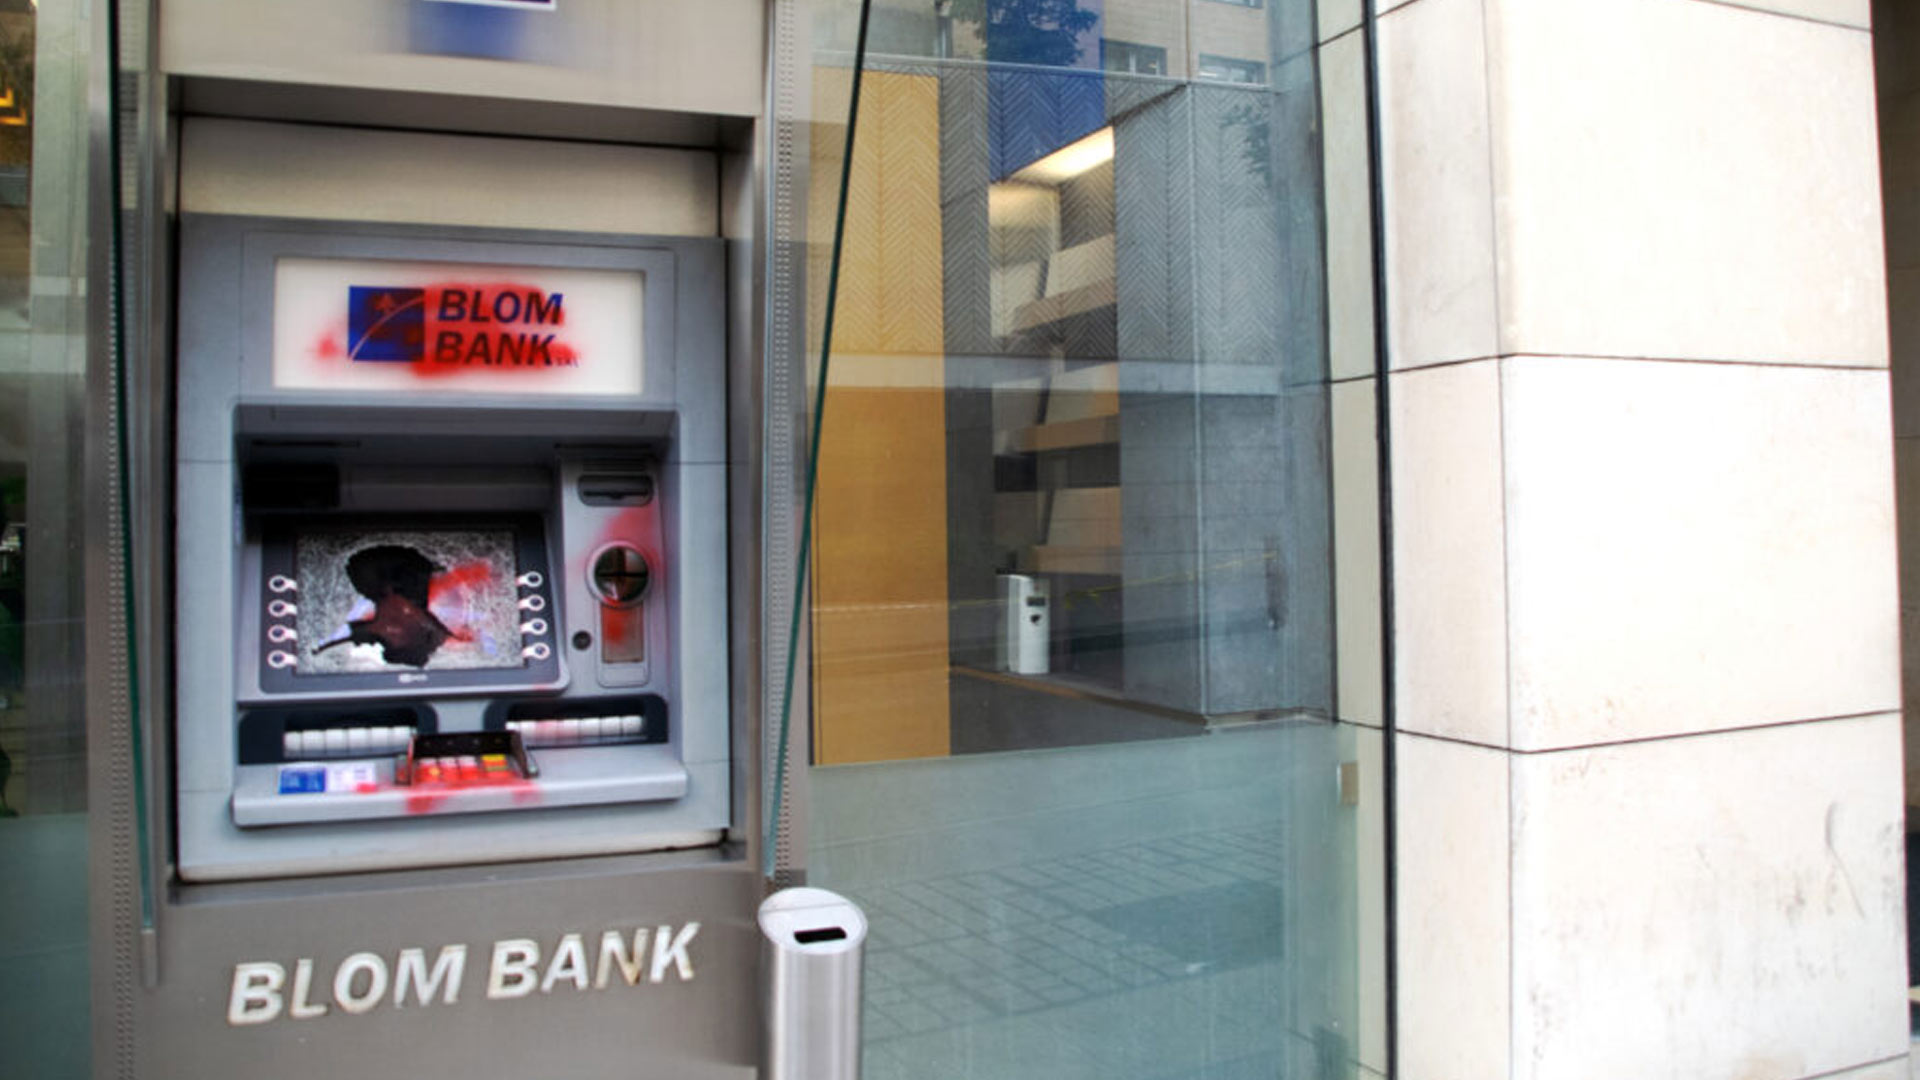 Lebanon Bank Holdups, Who Is The Real Criminal?